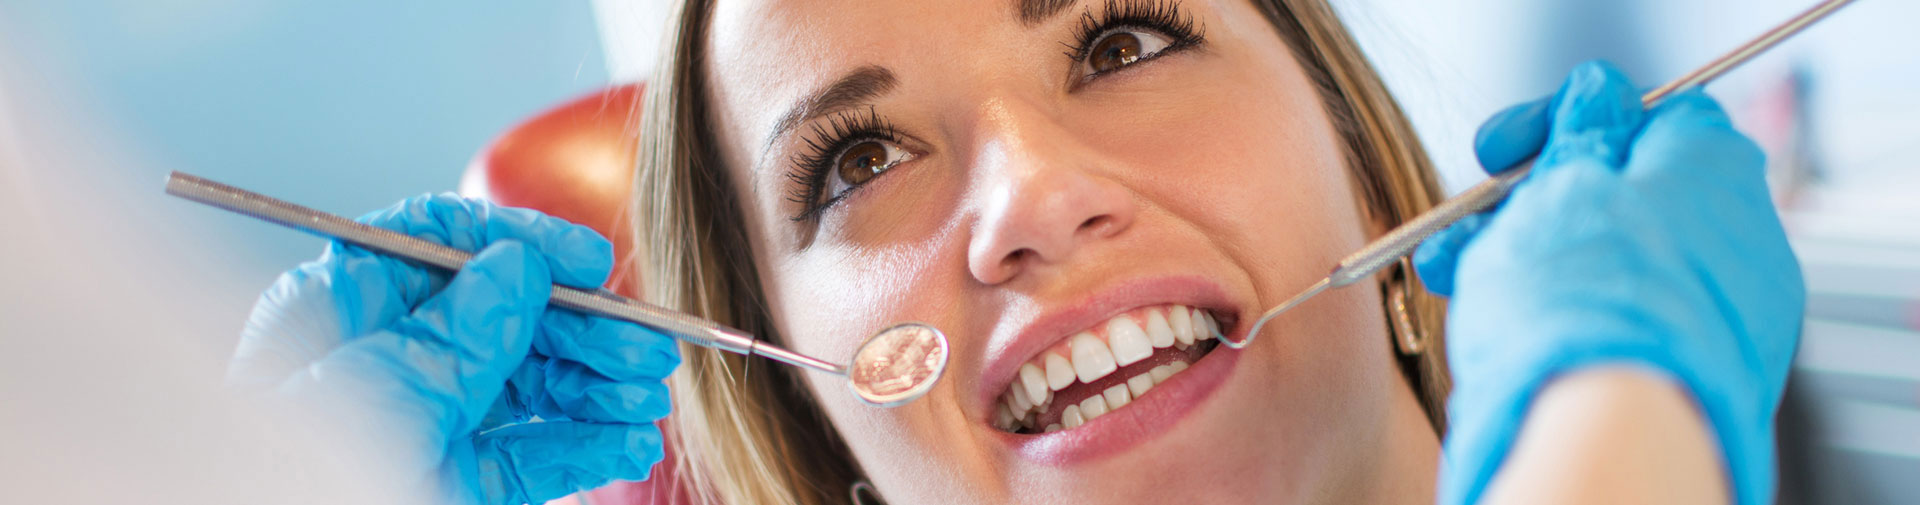 Seguro odontológico plano odonto bronze